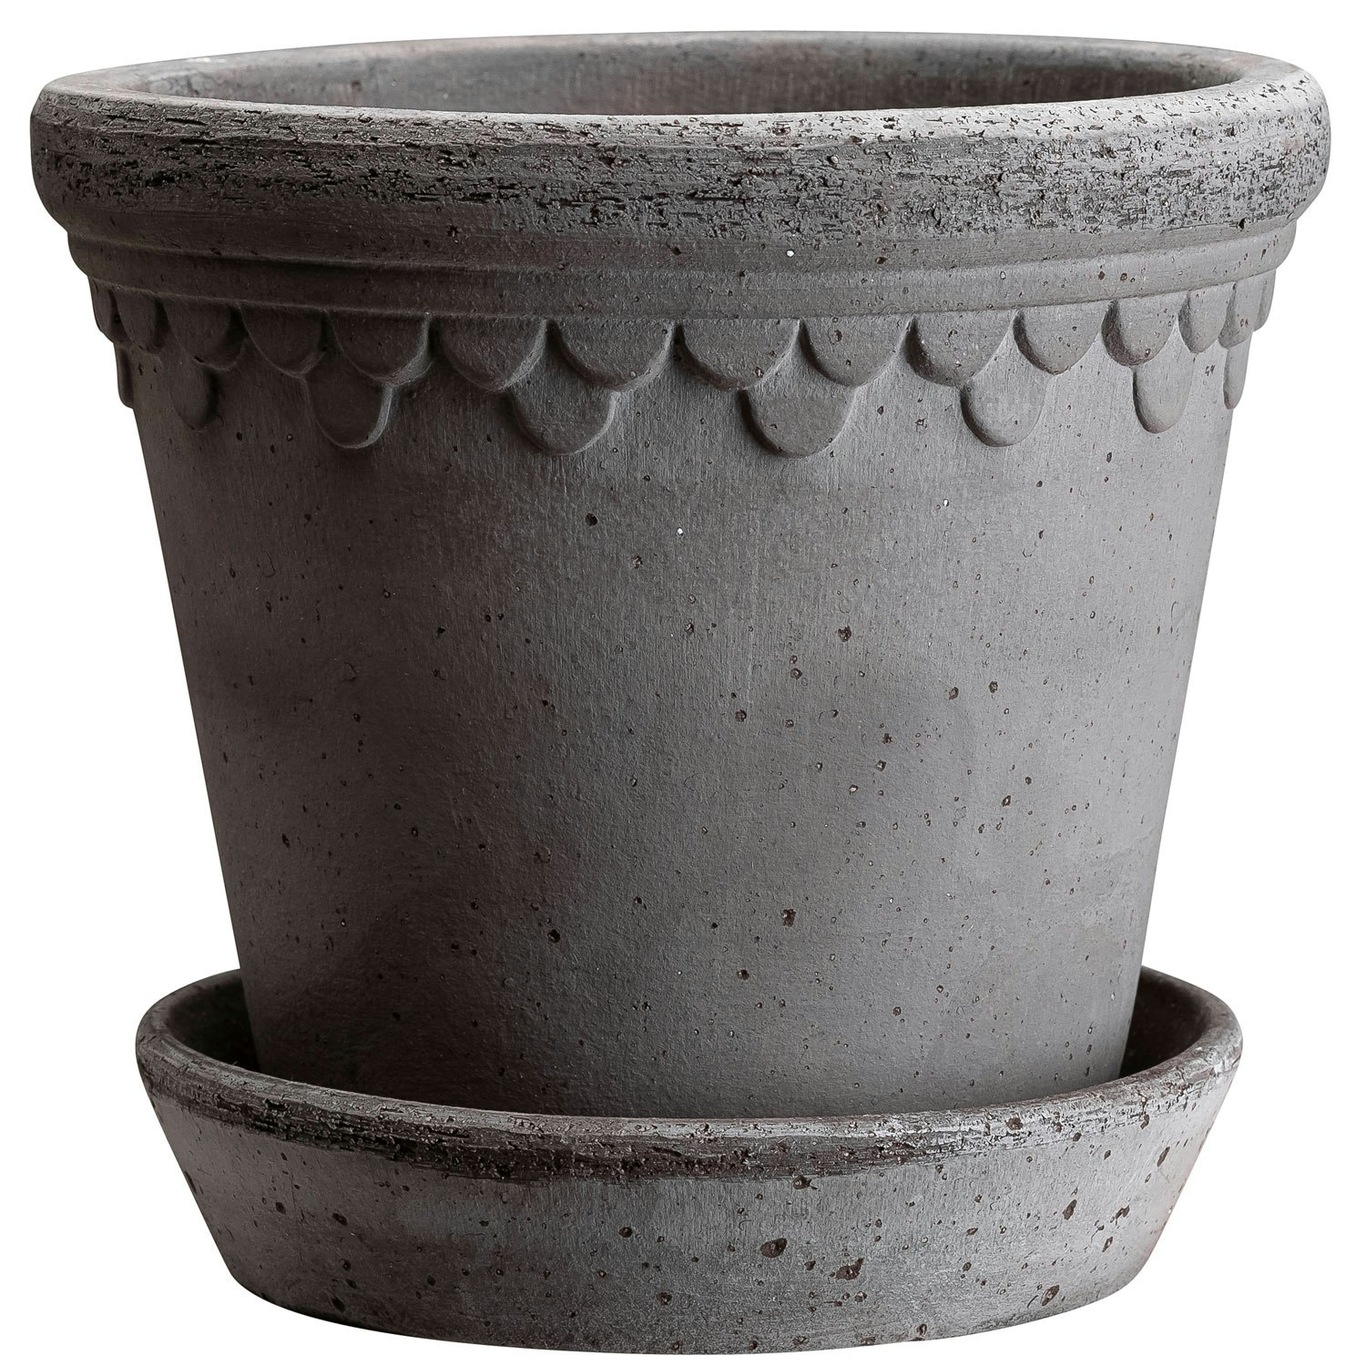 https://royaldesign.com/image/2/bergs-potter-copenhagen-pot-grey-10?w=800&quality=80